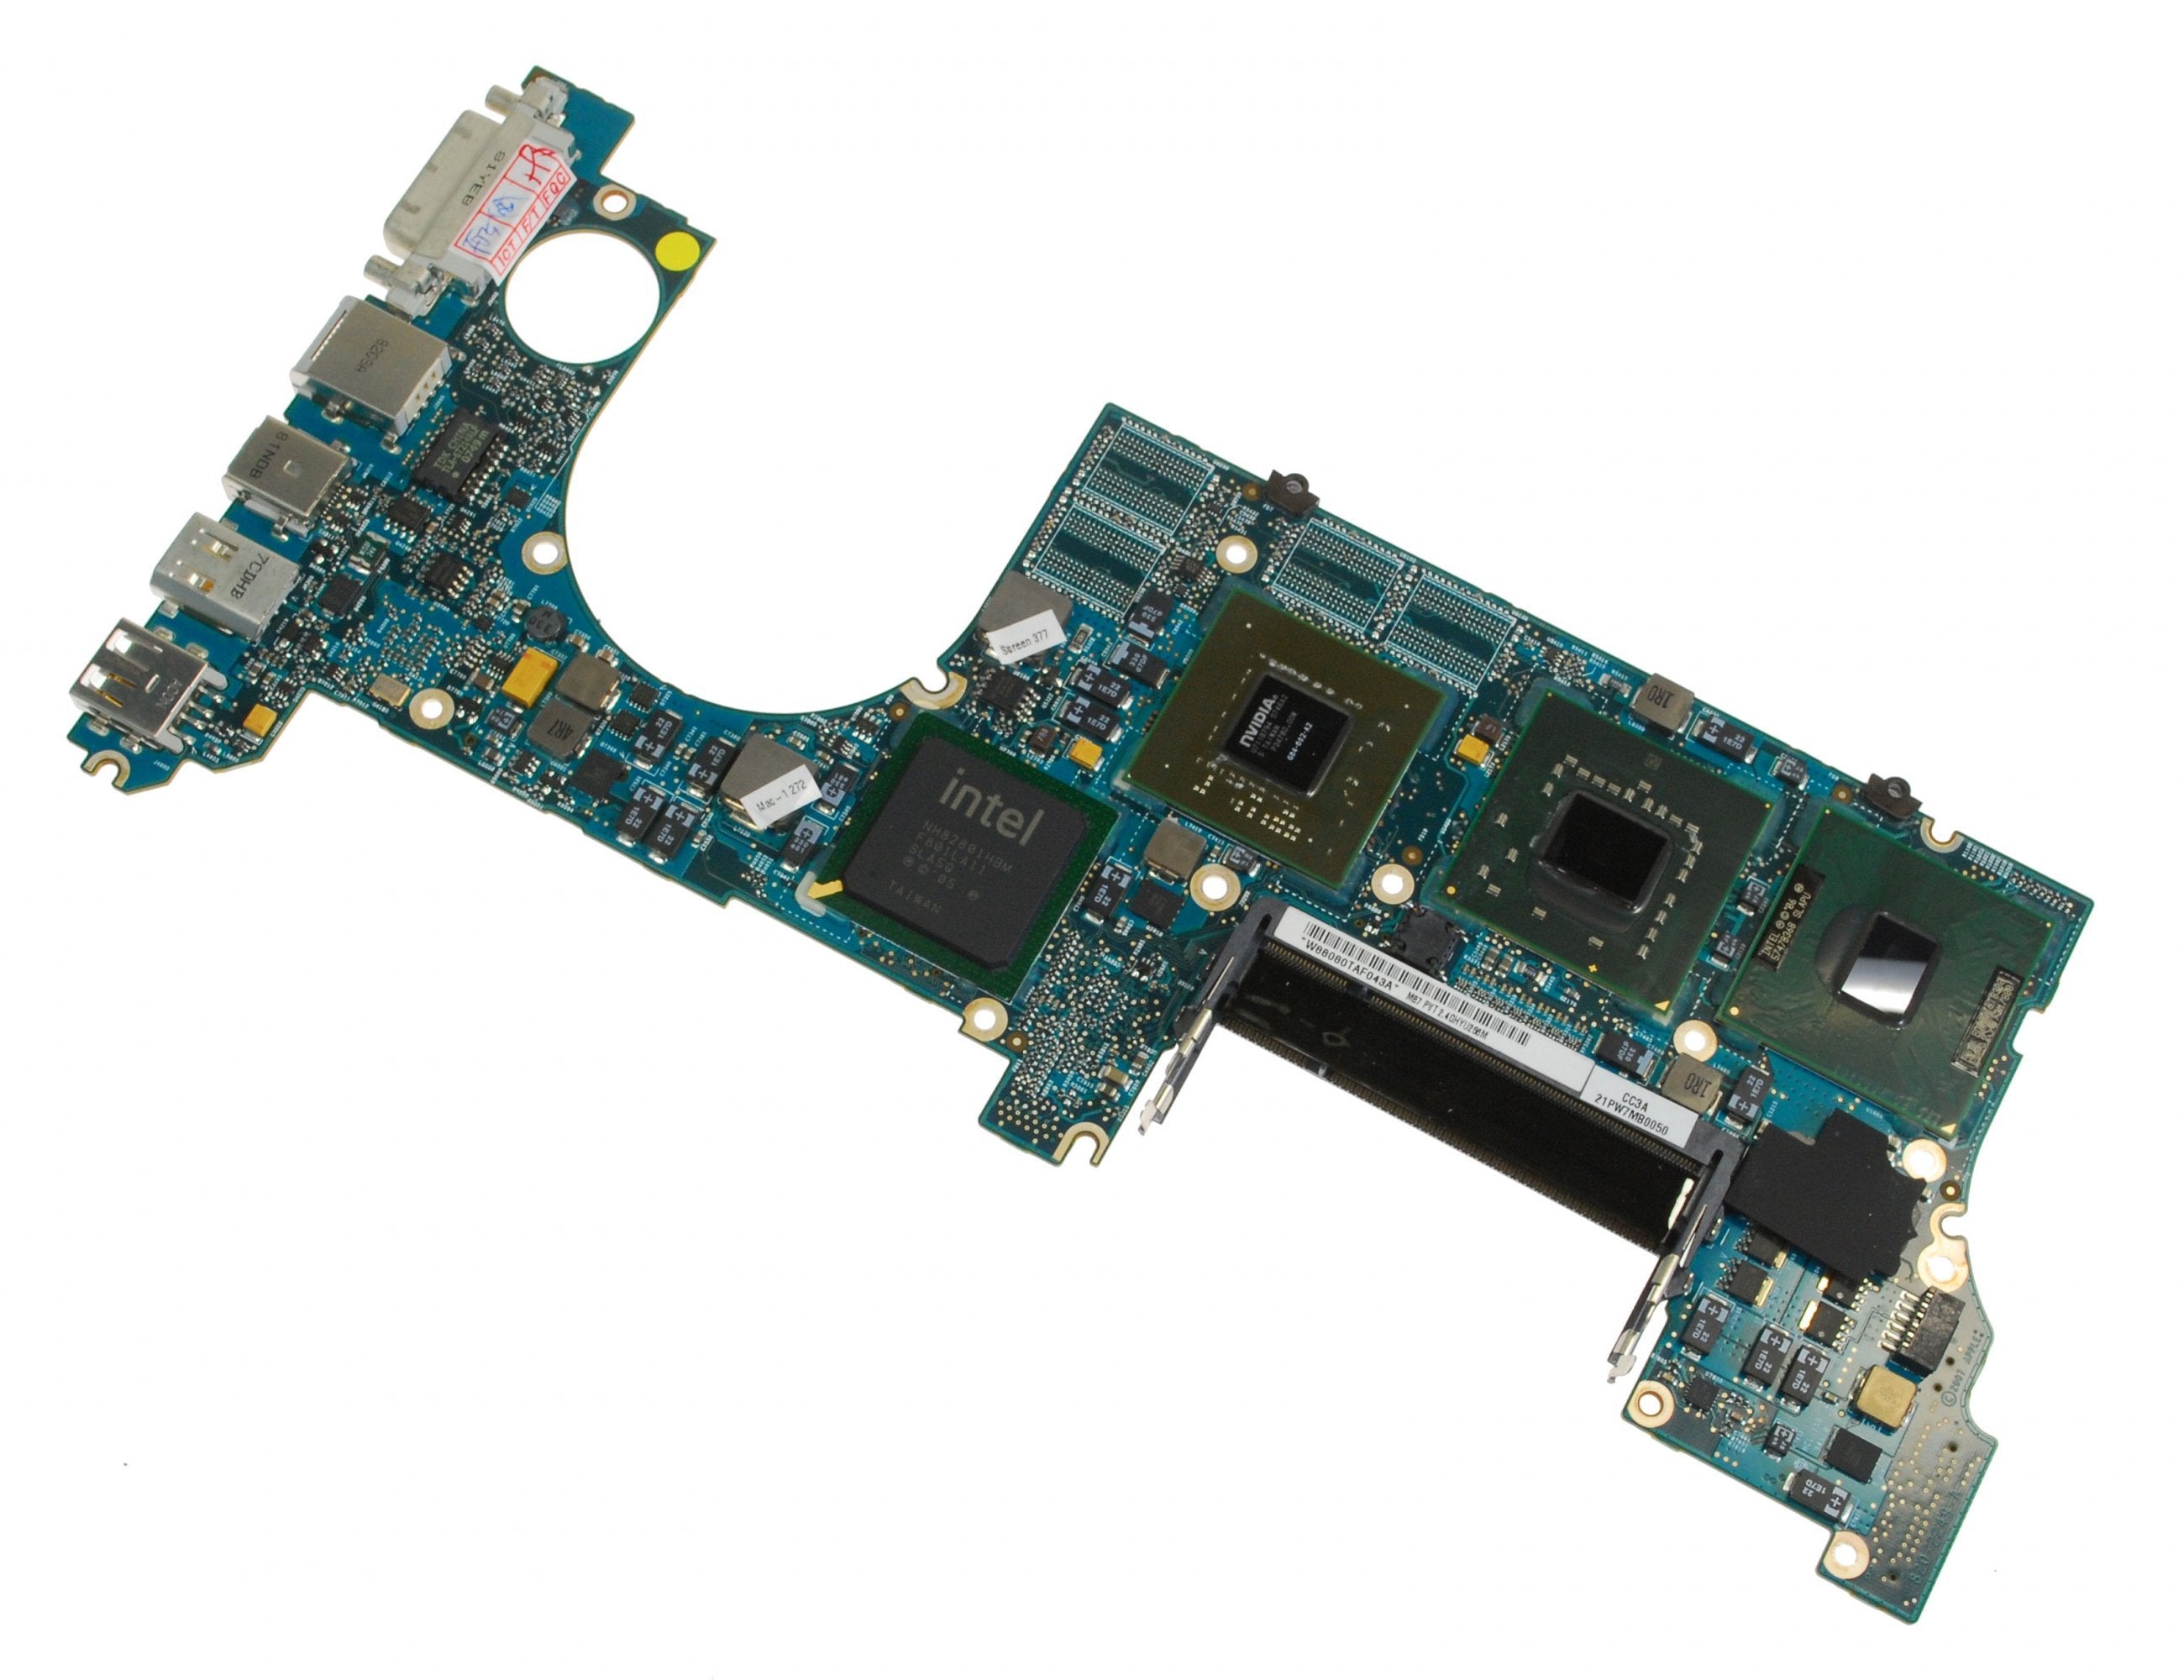 MacBook Pro 15" (Model A1260) 2.4 GHz Logic Board